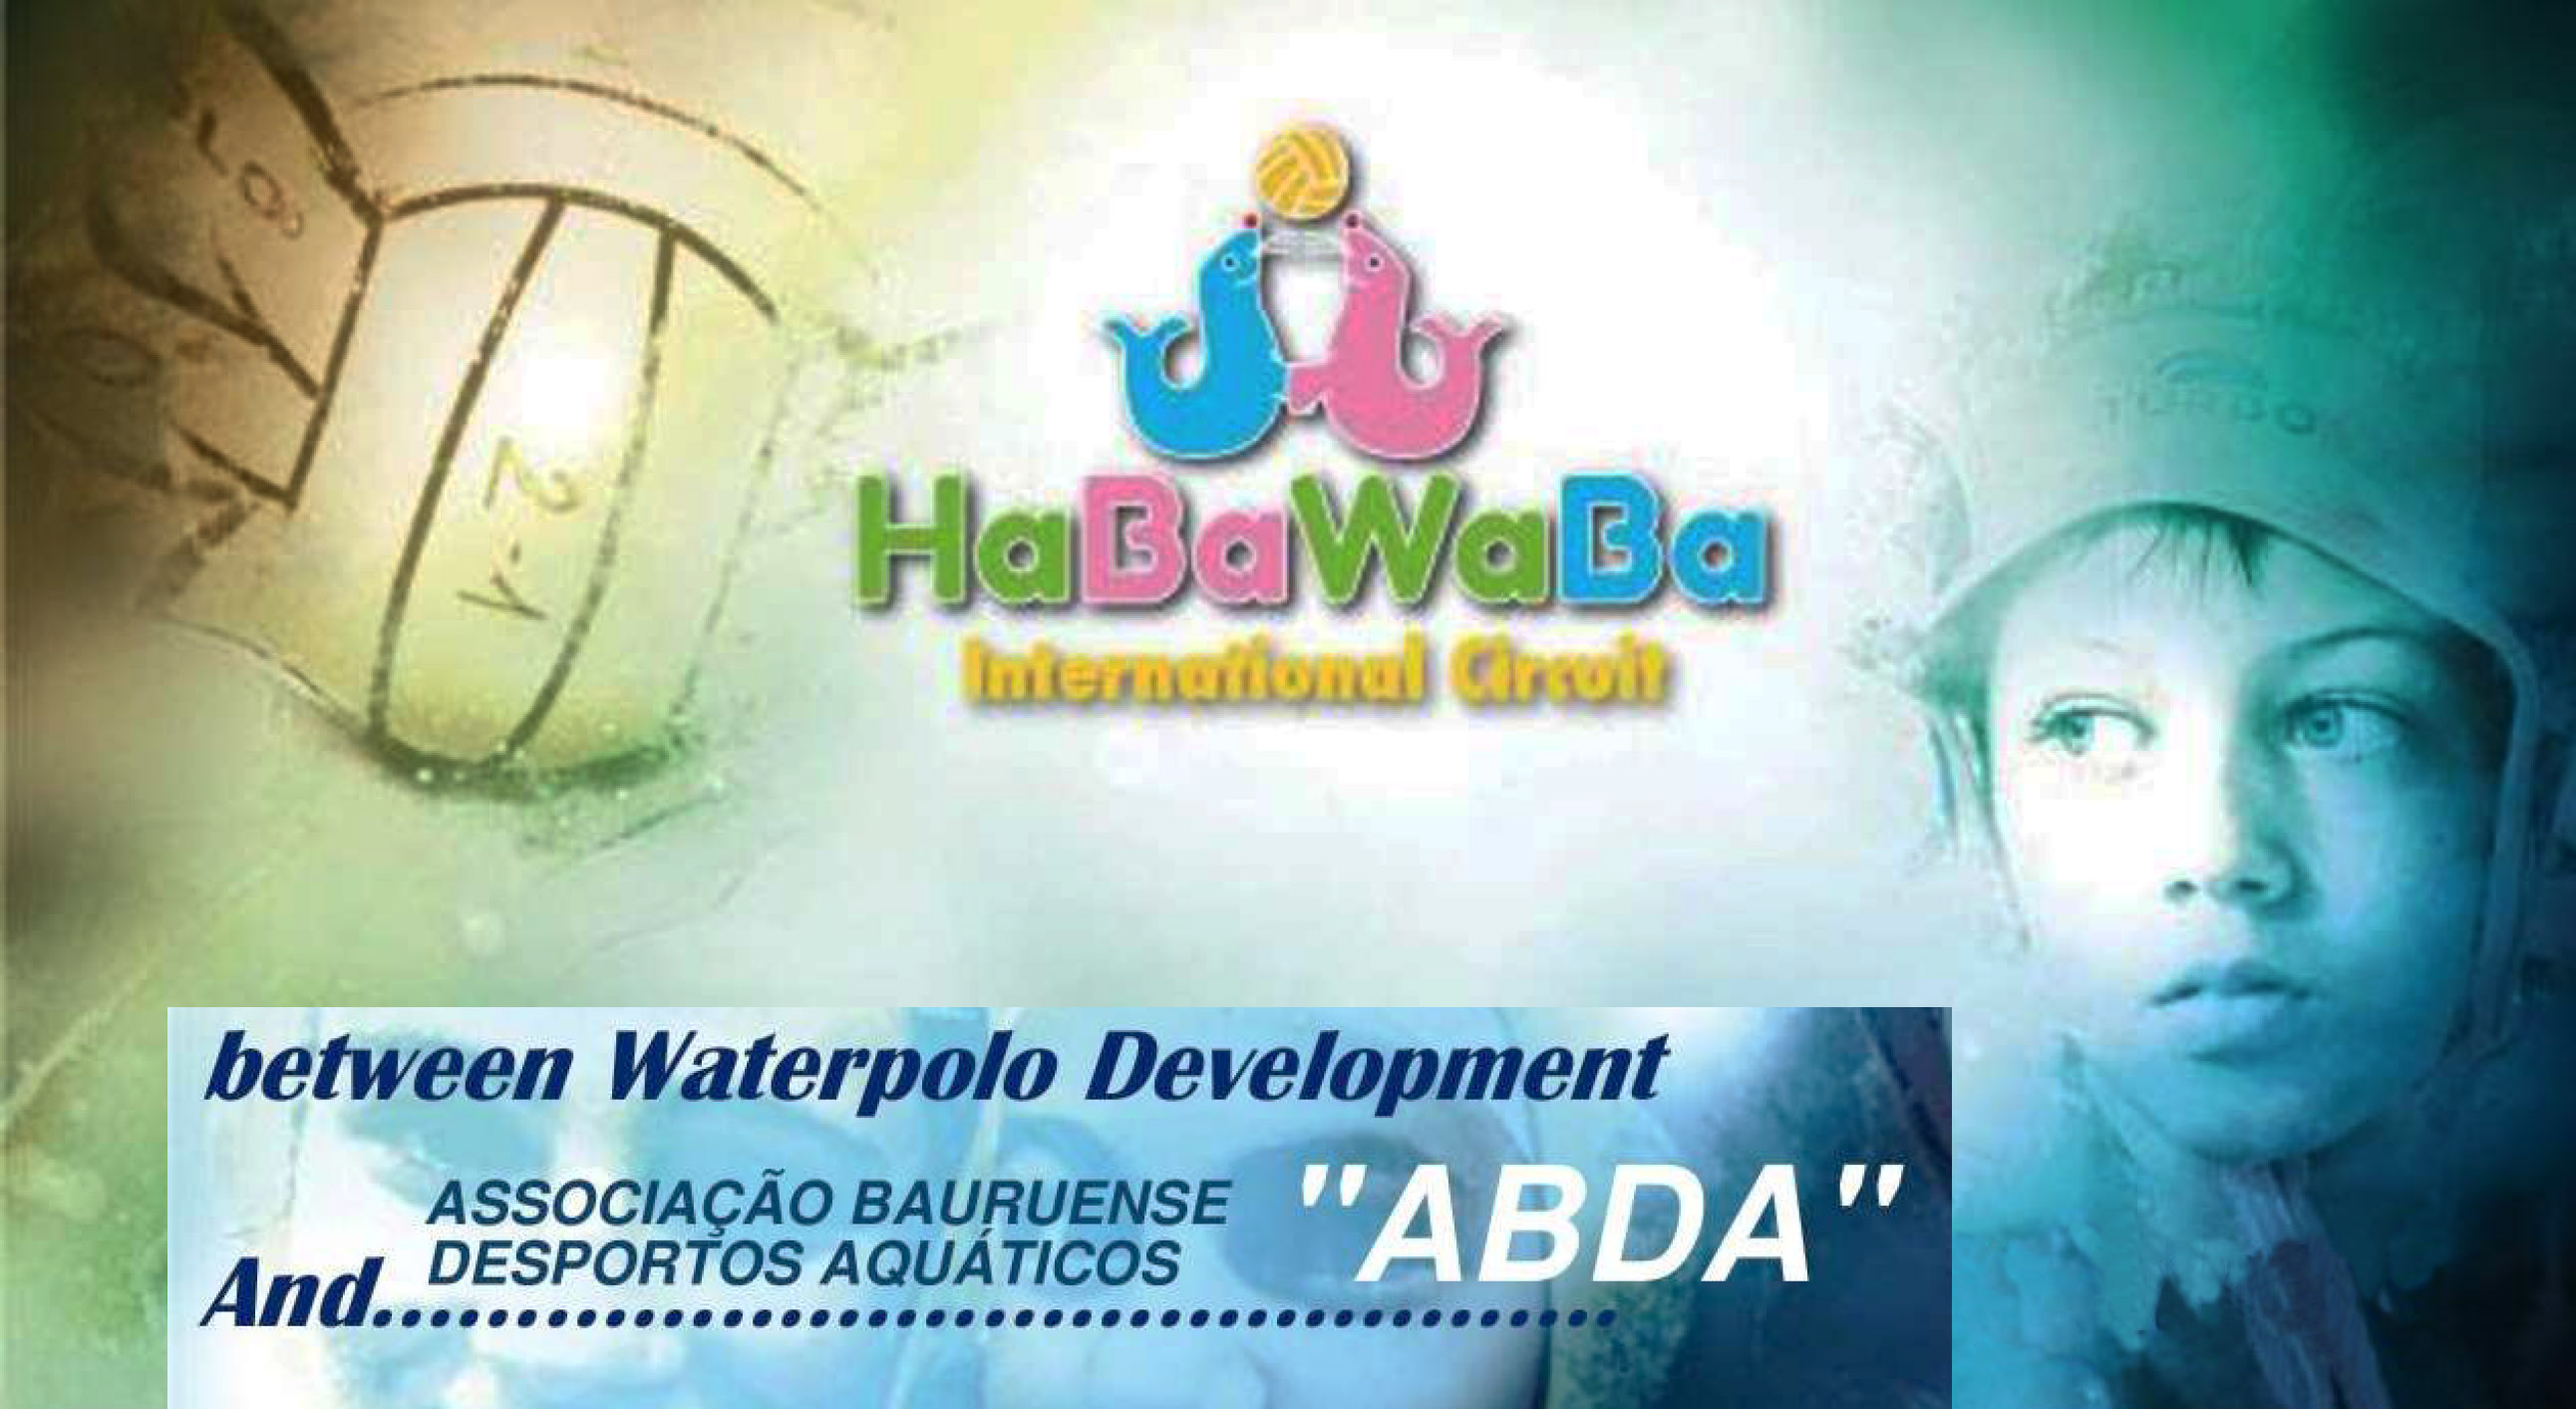 ABDA traz para Brasil e Amrica Latina importante Festival HaBaWaBa